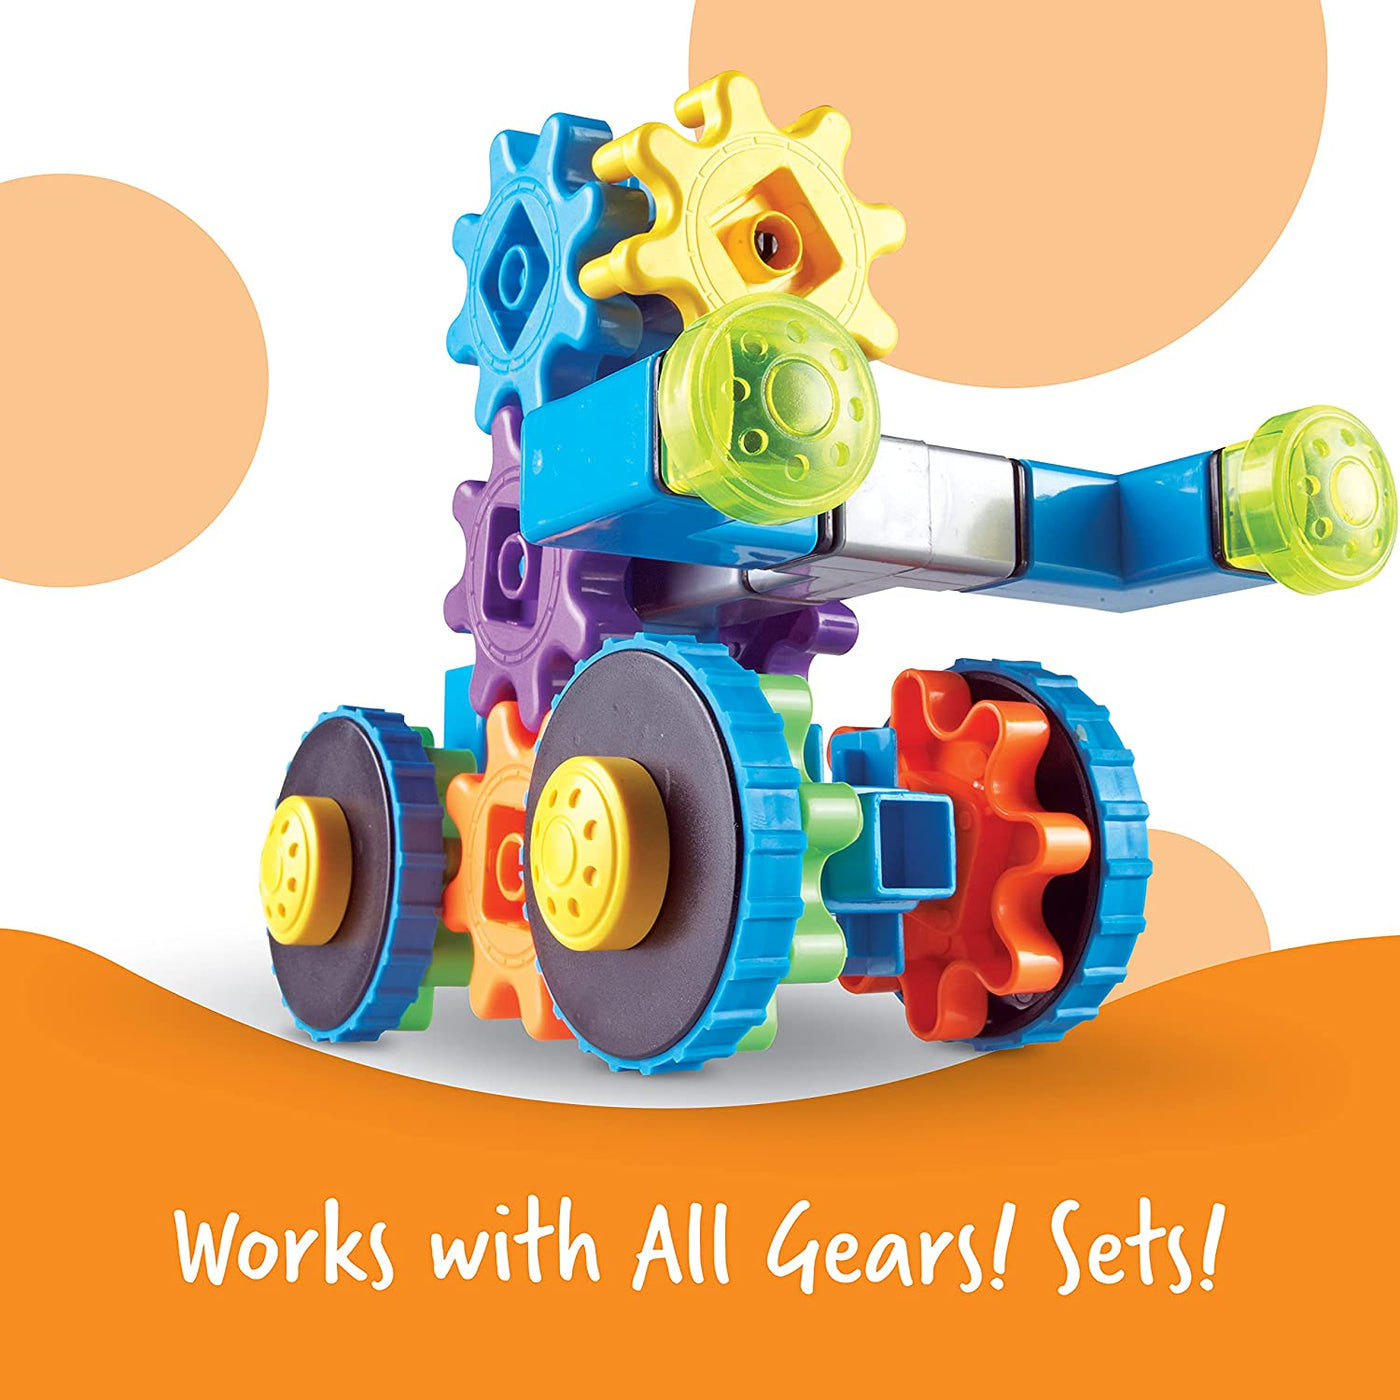 Gears! Gears! Gears!® Rover Gears| Learning Resources